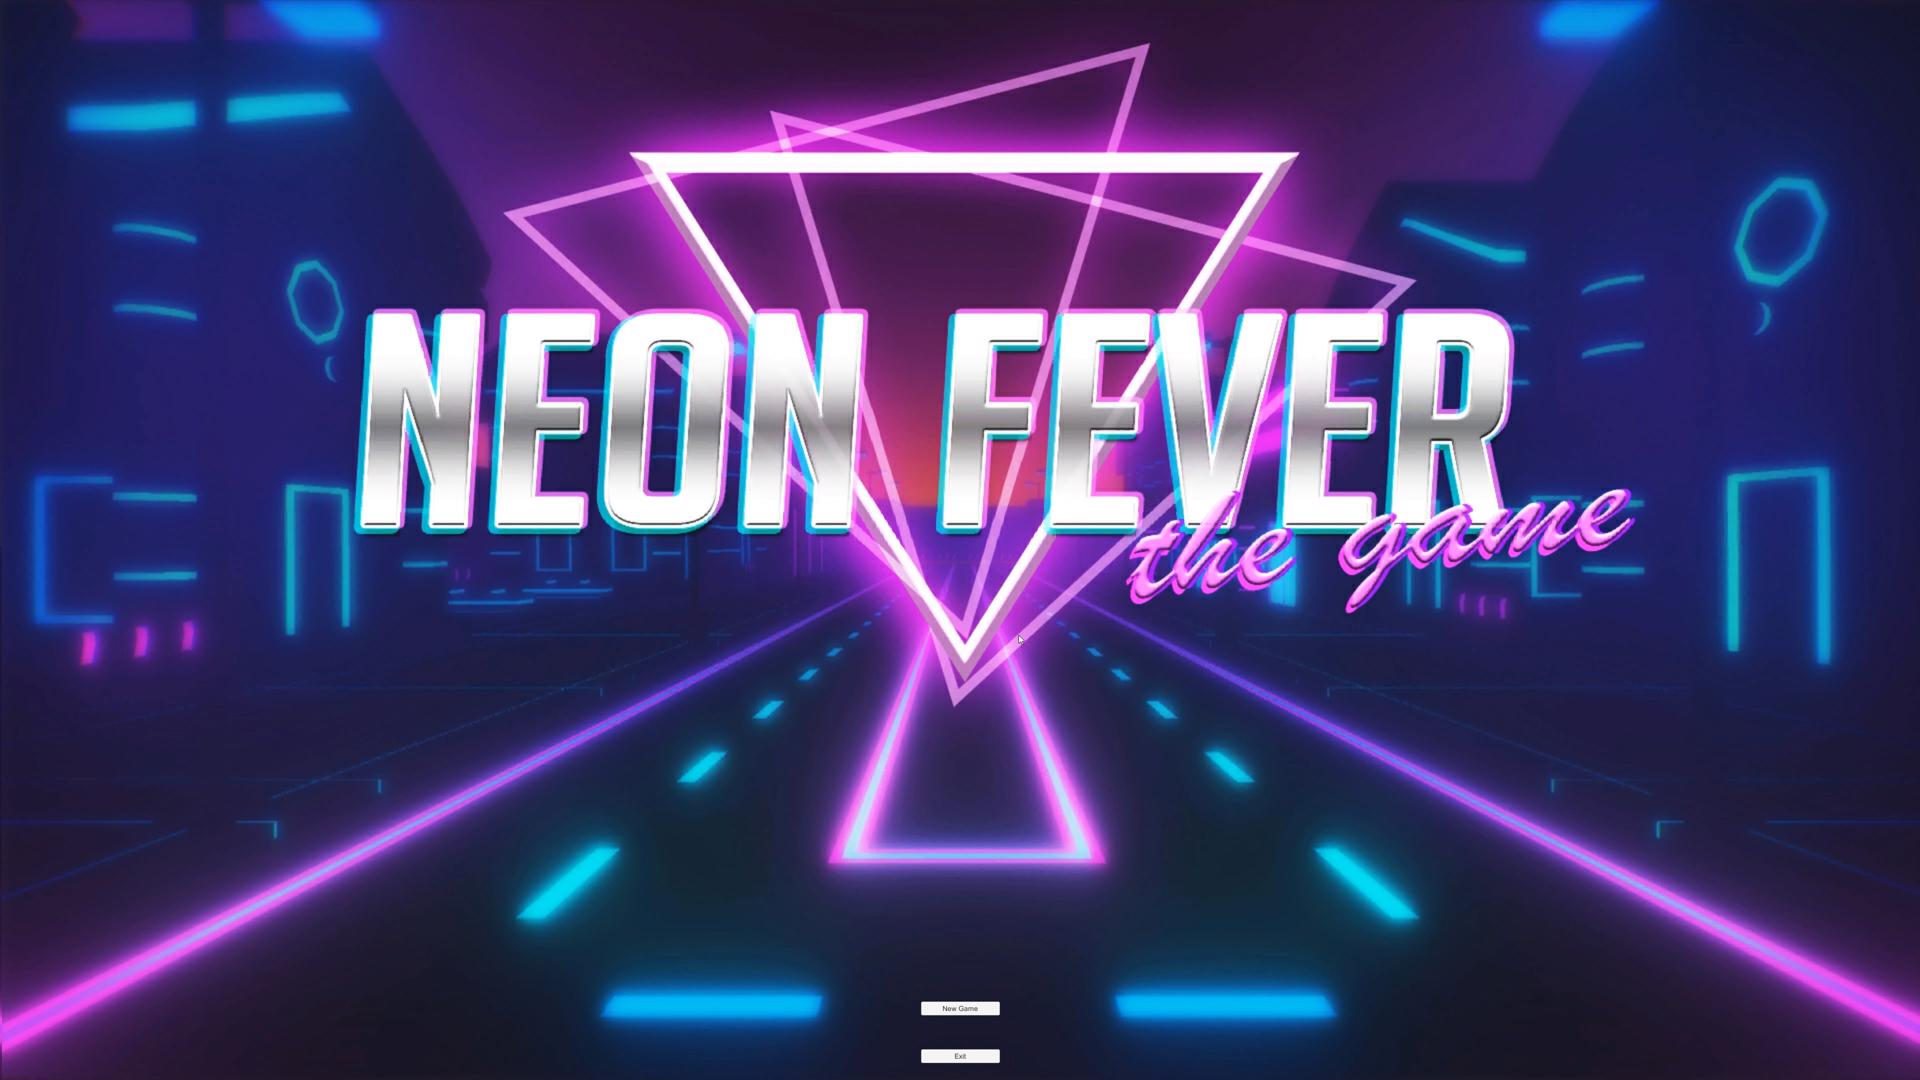 Global Game Jam 2018 - Neon Fever